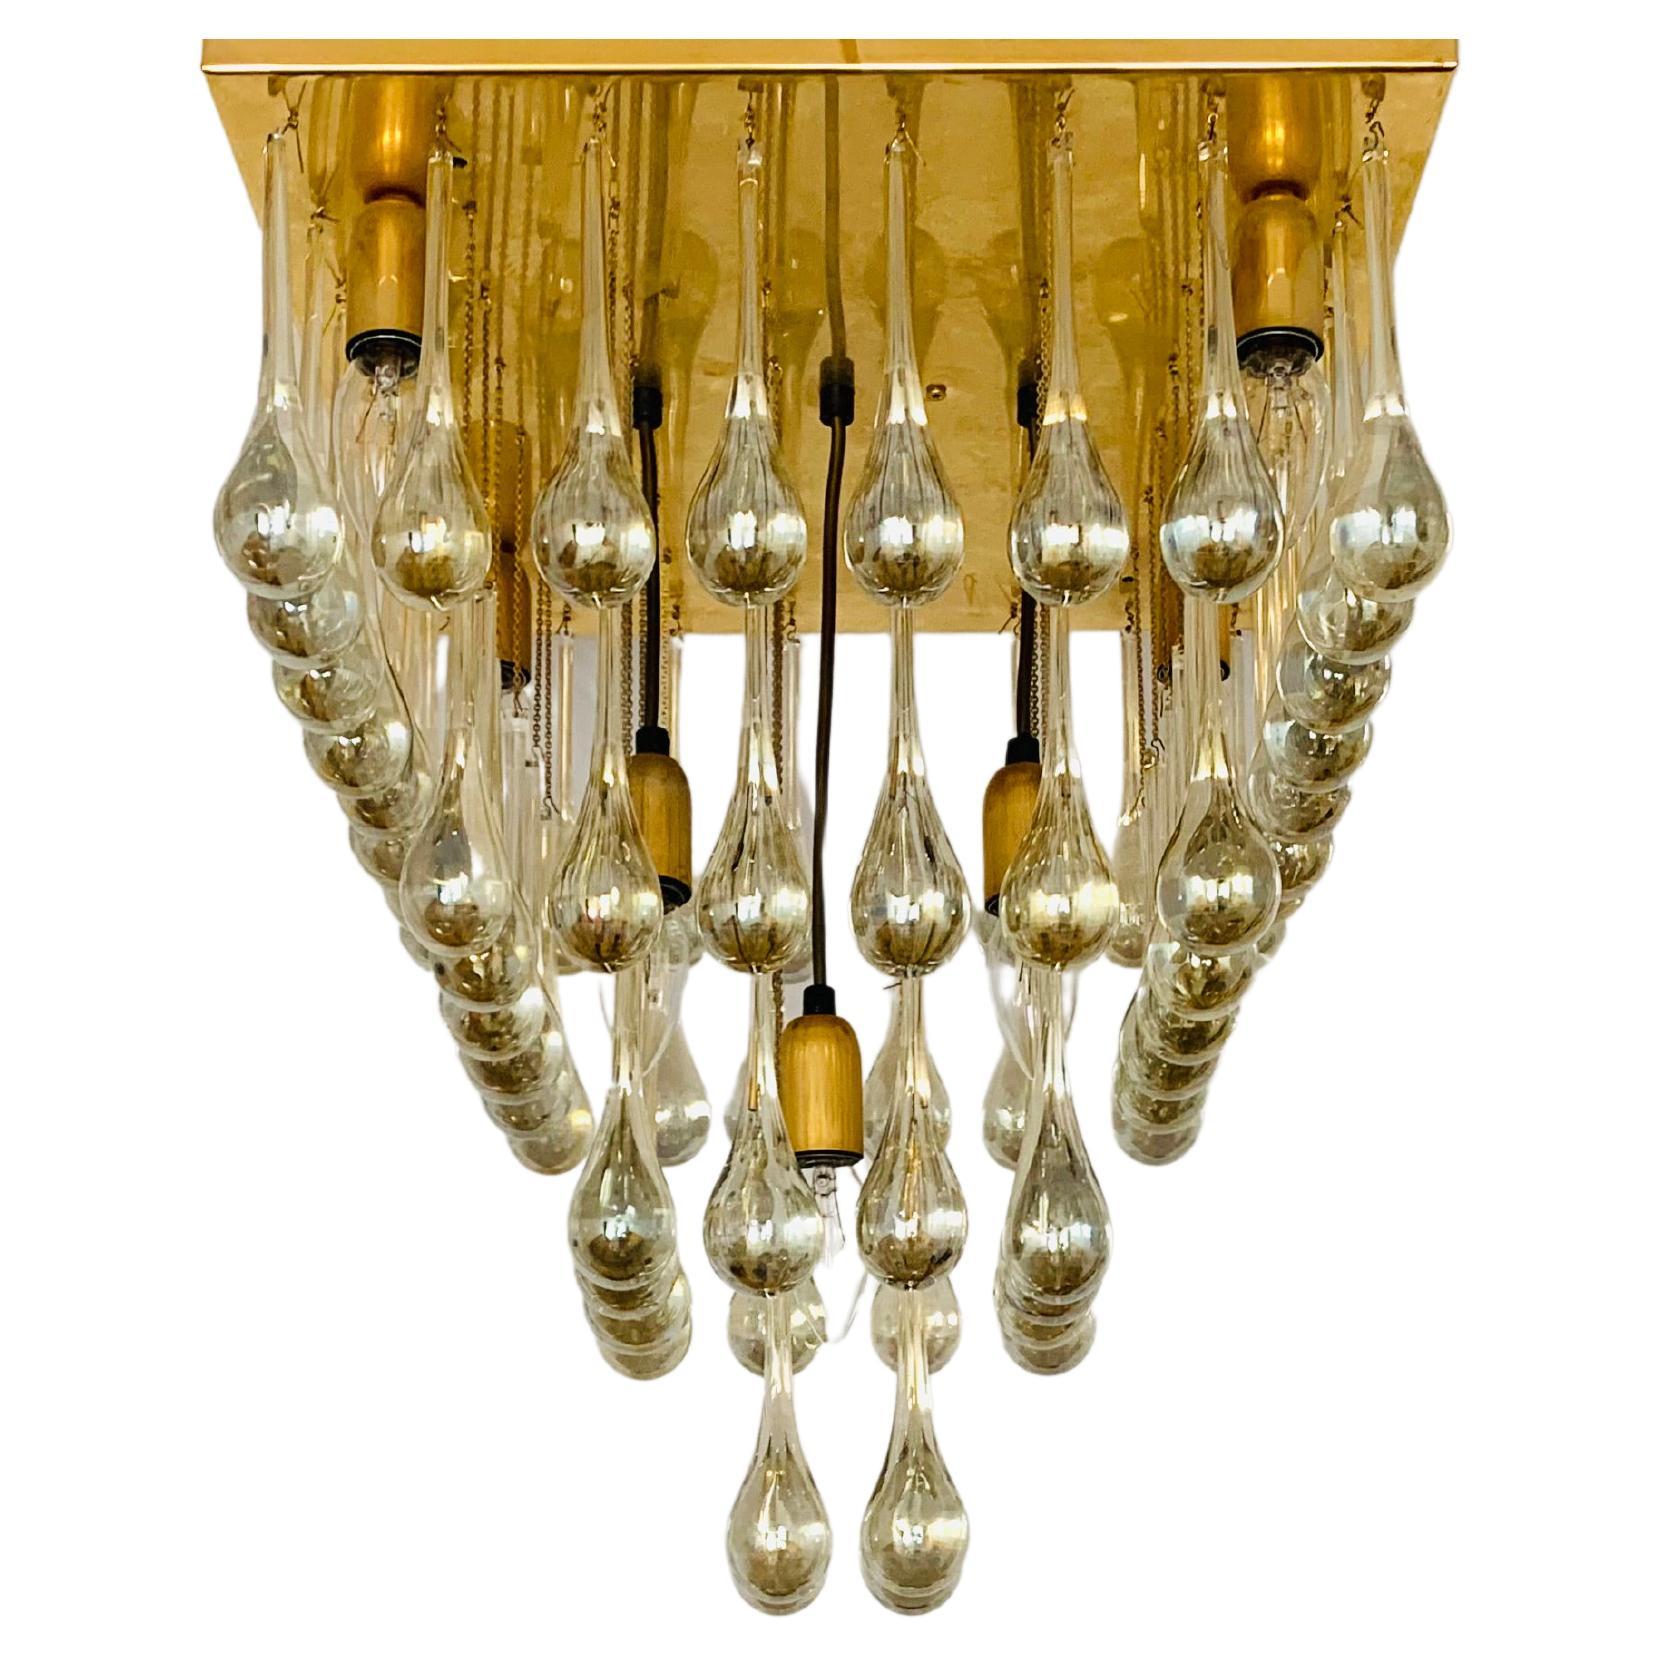 Ceiling chandelier by Ernst Palme